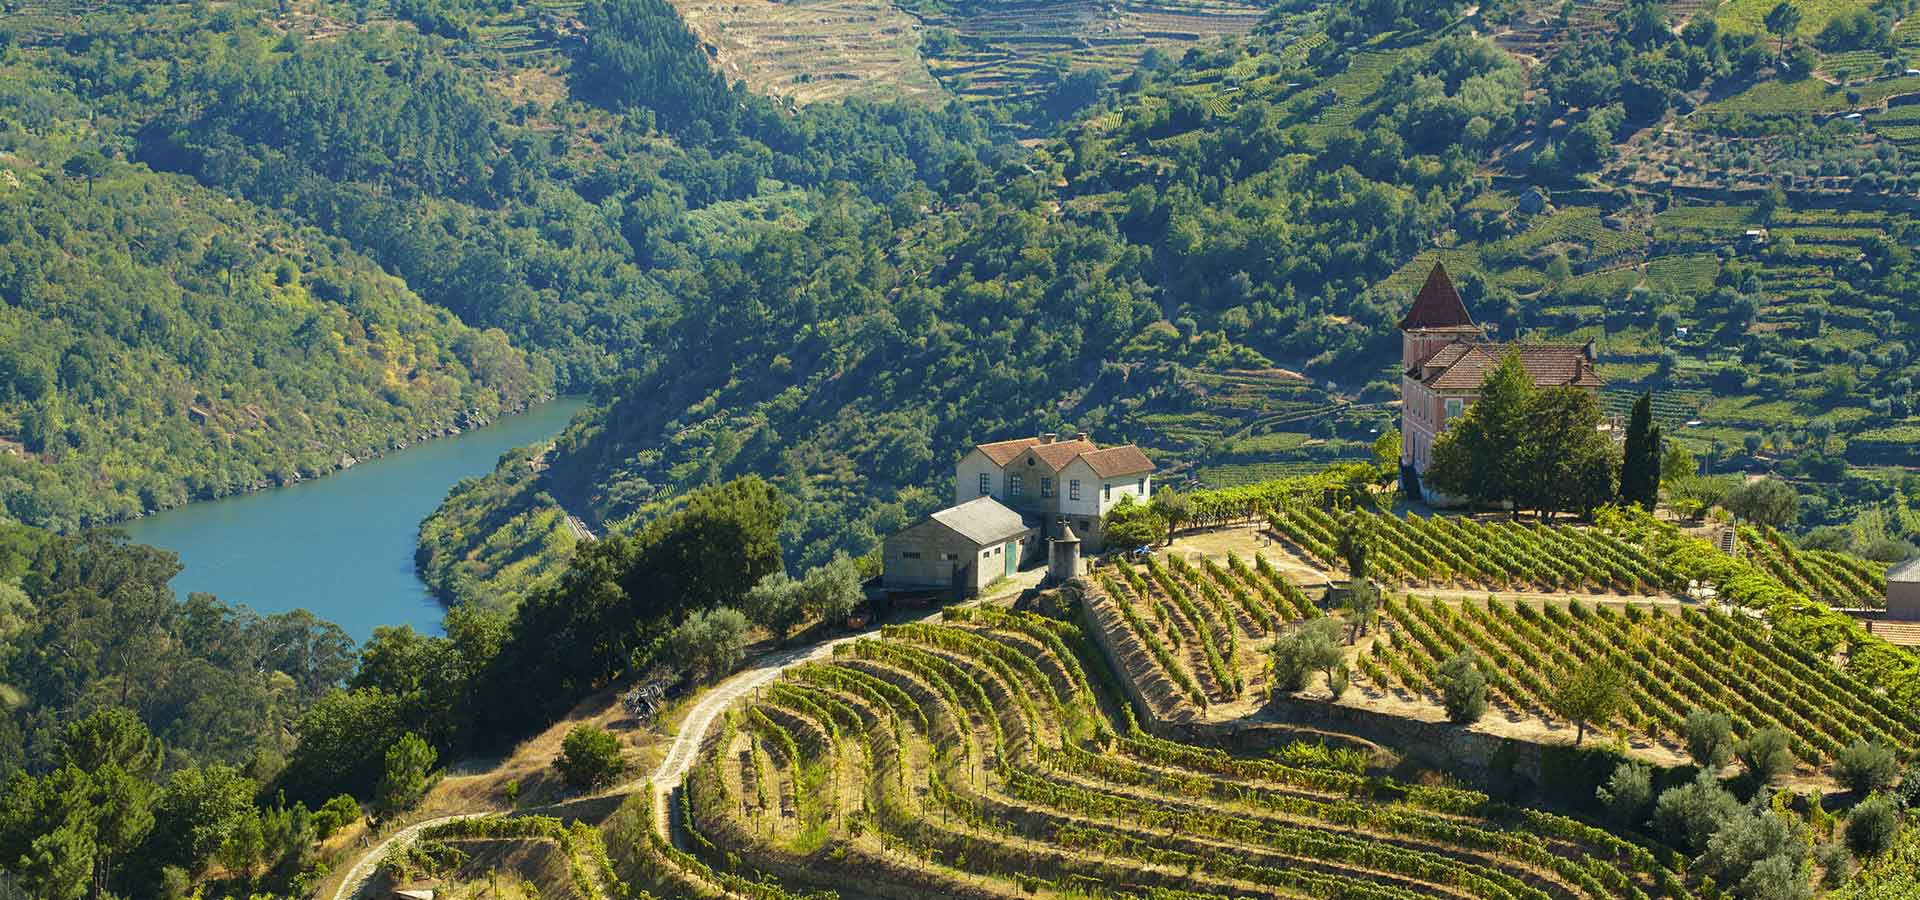 Voyage-Europe-Portugal-Vallee-Douro